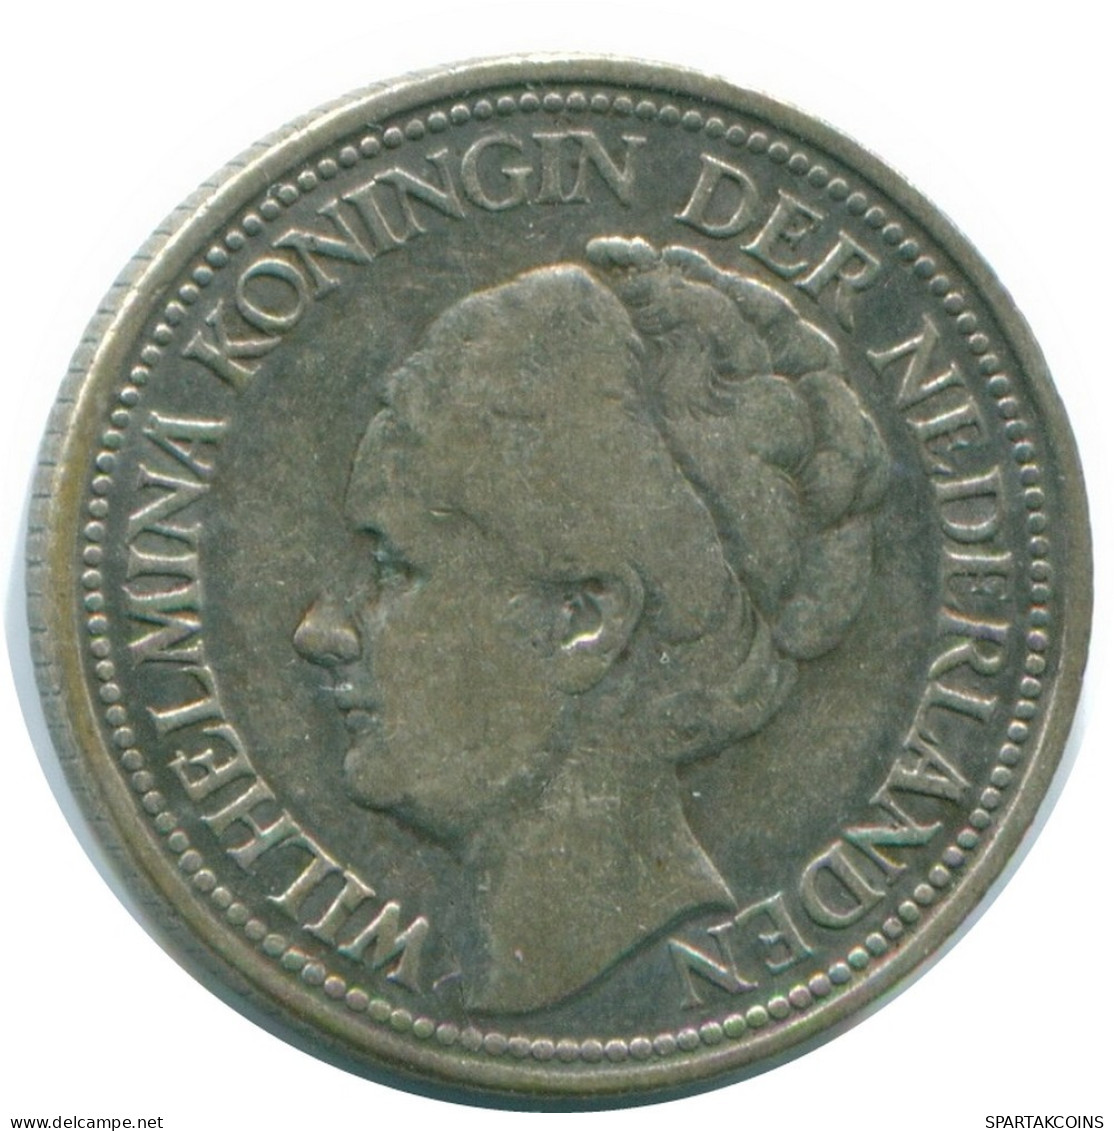 1/4 GULDEN 1947 CURACAO Netherlands SILVER Colonial Coin #NL10838.4.U.A - Curaçao